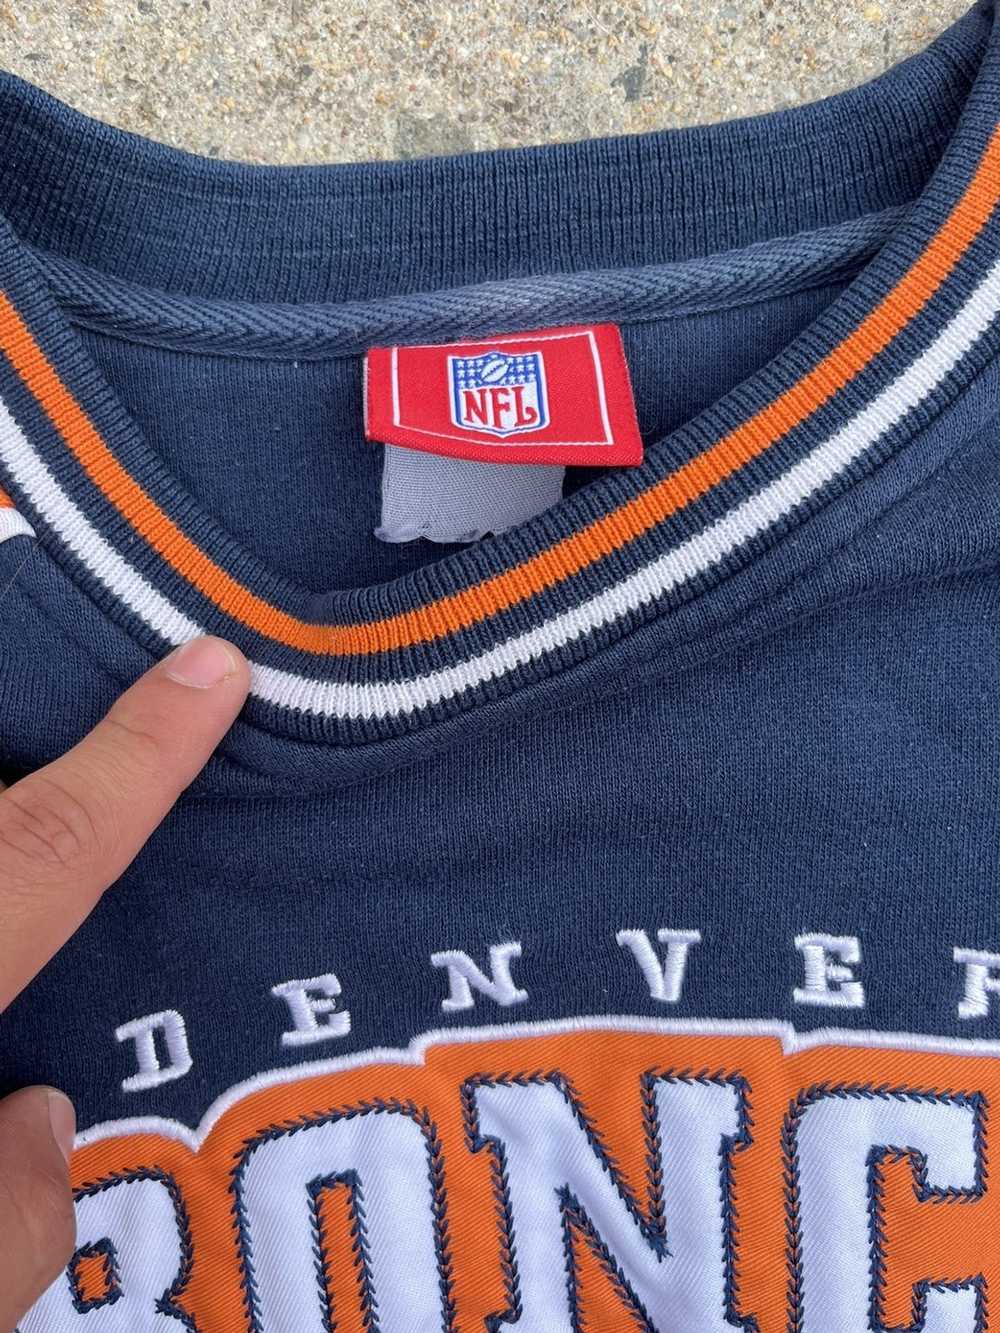 NFL Denver Broncos NFL Crew Neck Sweatshirt - image 3